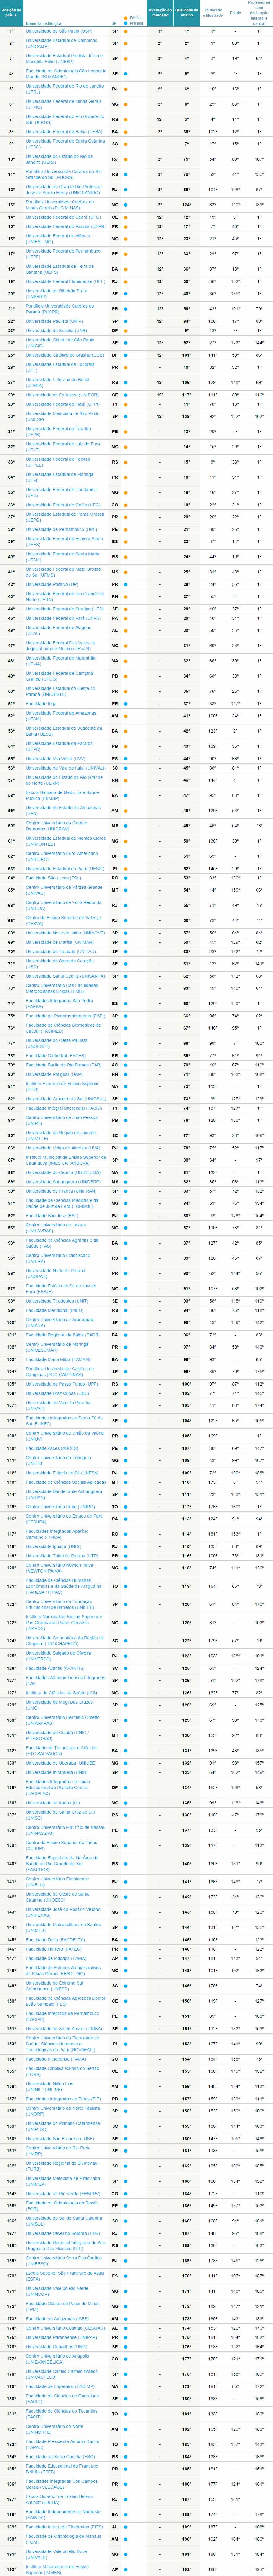 Ranking Faculdades de Odontologia 2015